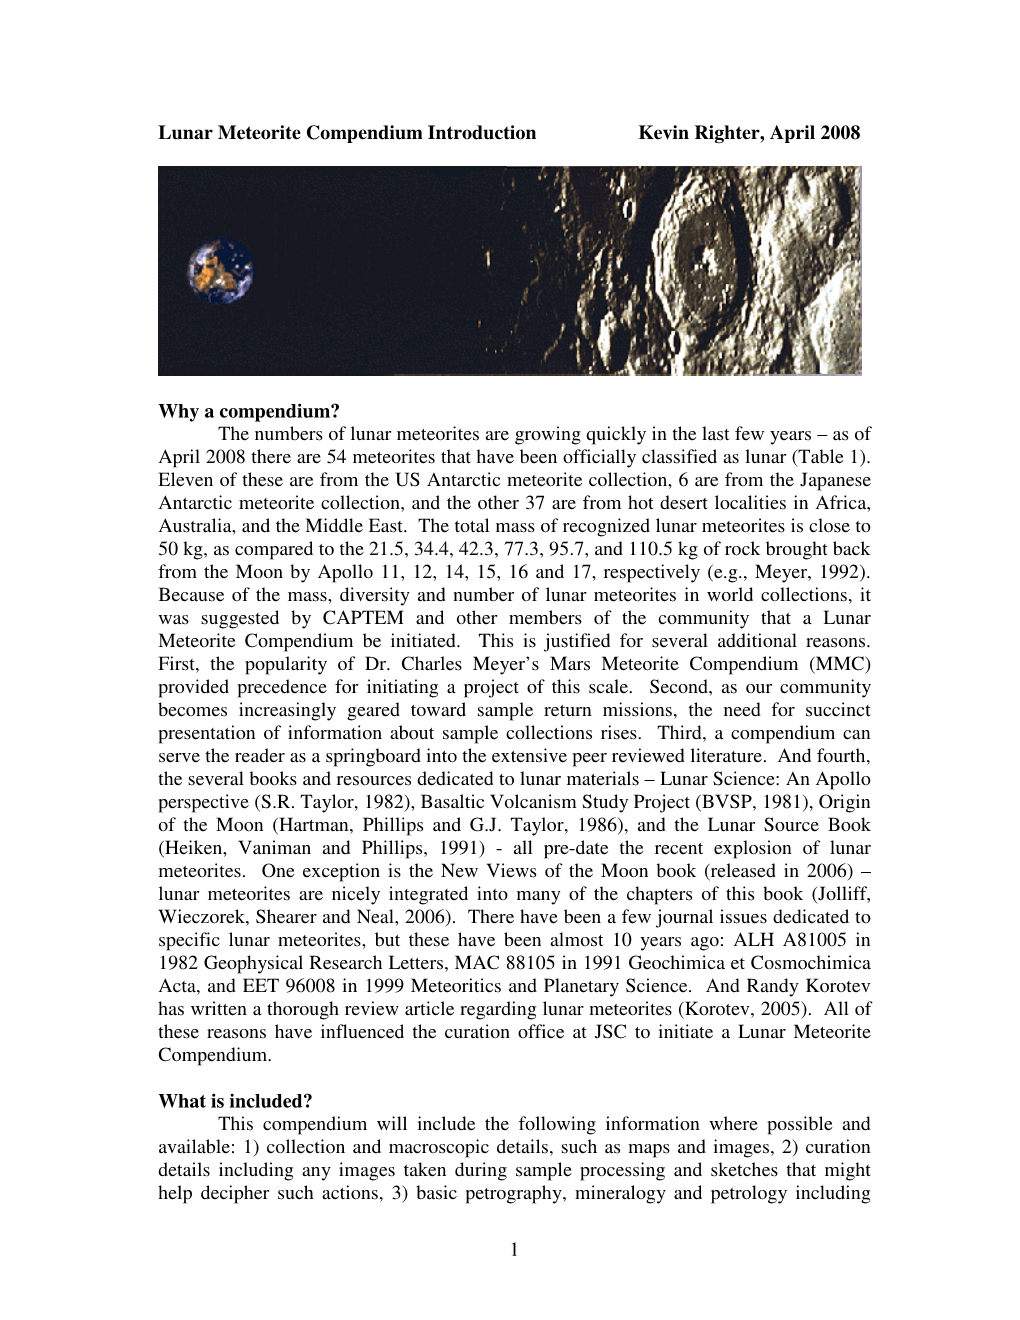 Introduction to the Lunar Meteorite Compendium